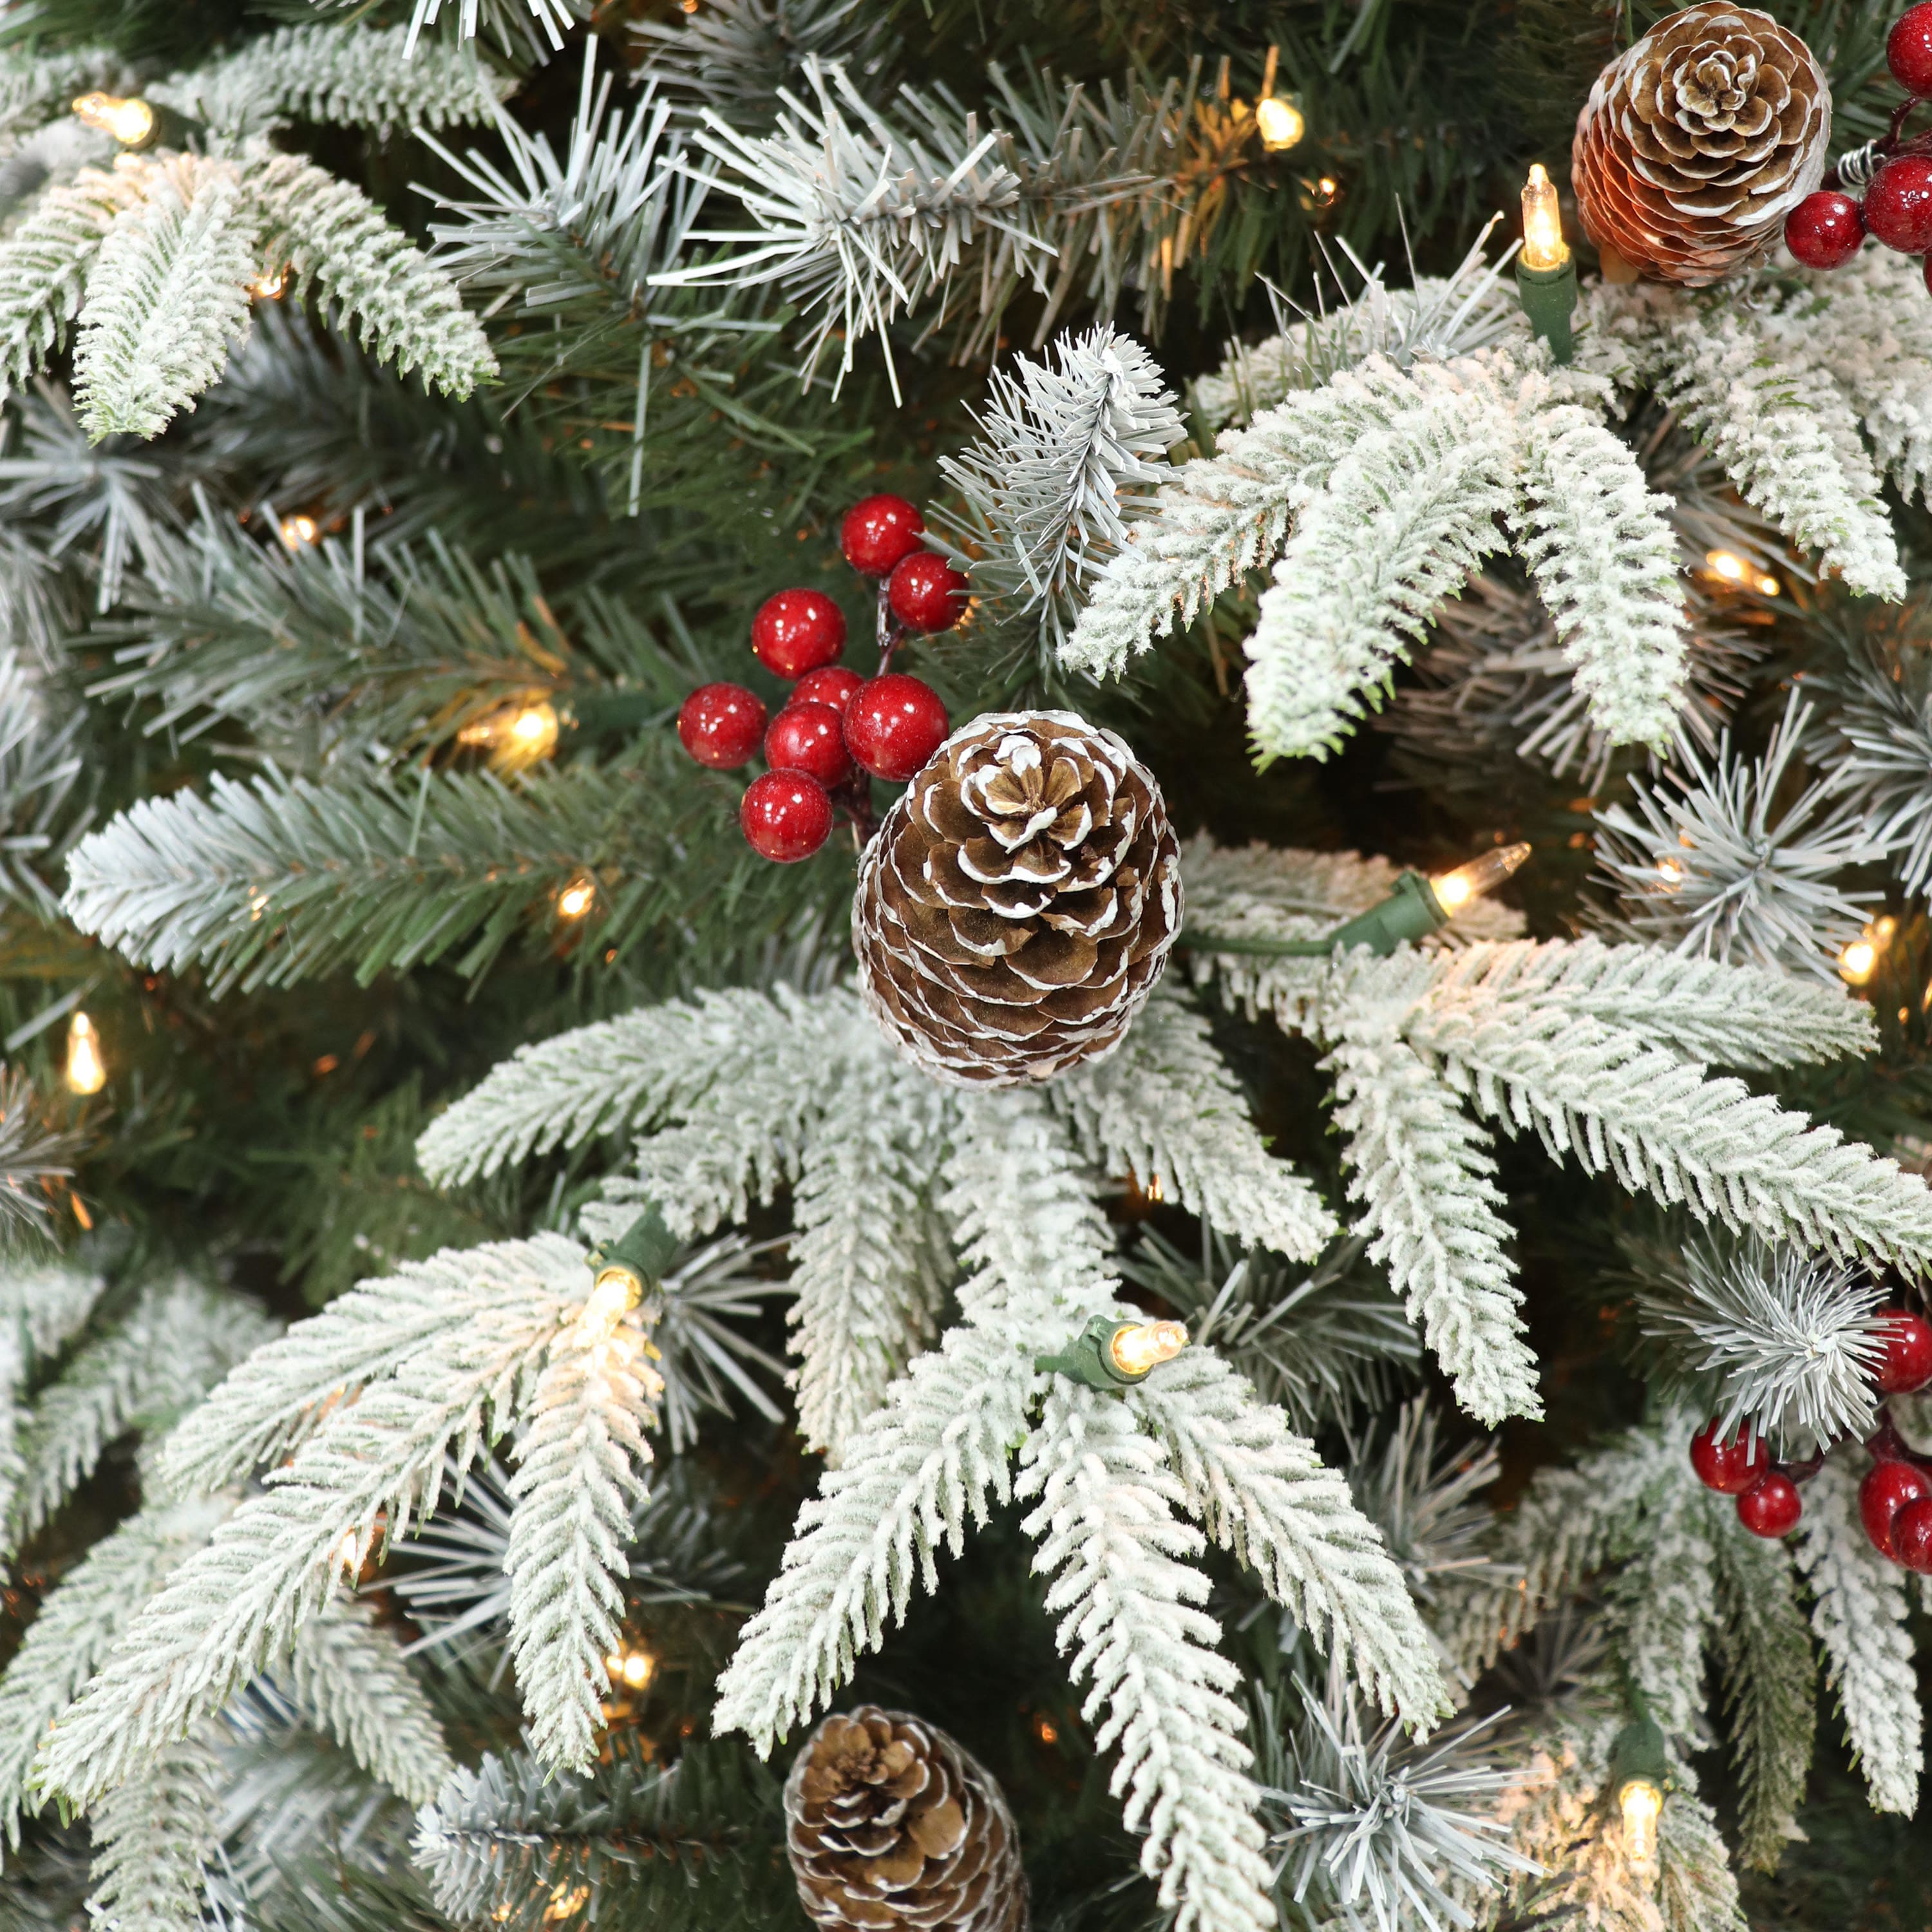 6 Pack: 4.5ft. Pre-Lit Flocked Halifax Fir Artificial Christmas Tree, Clear Incandescent Lights